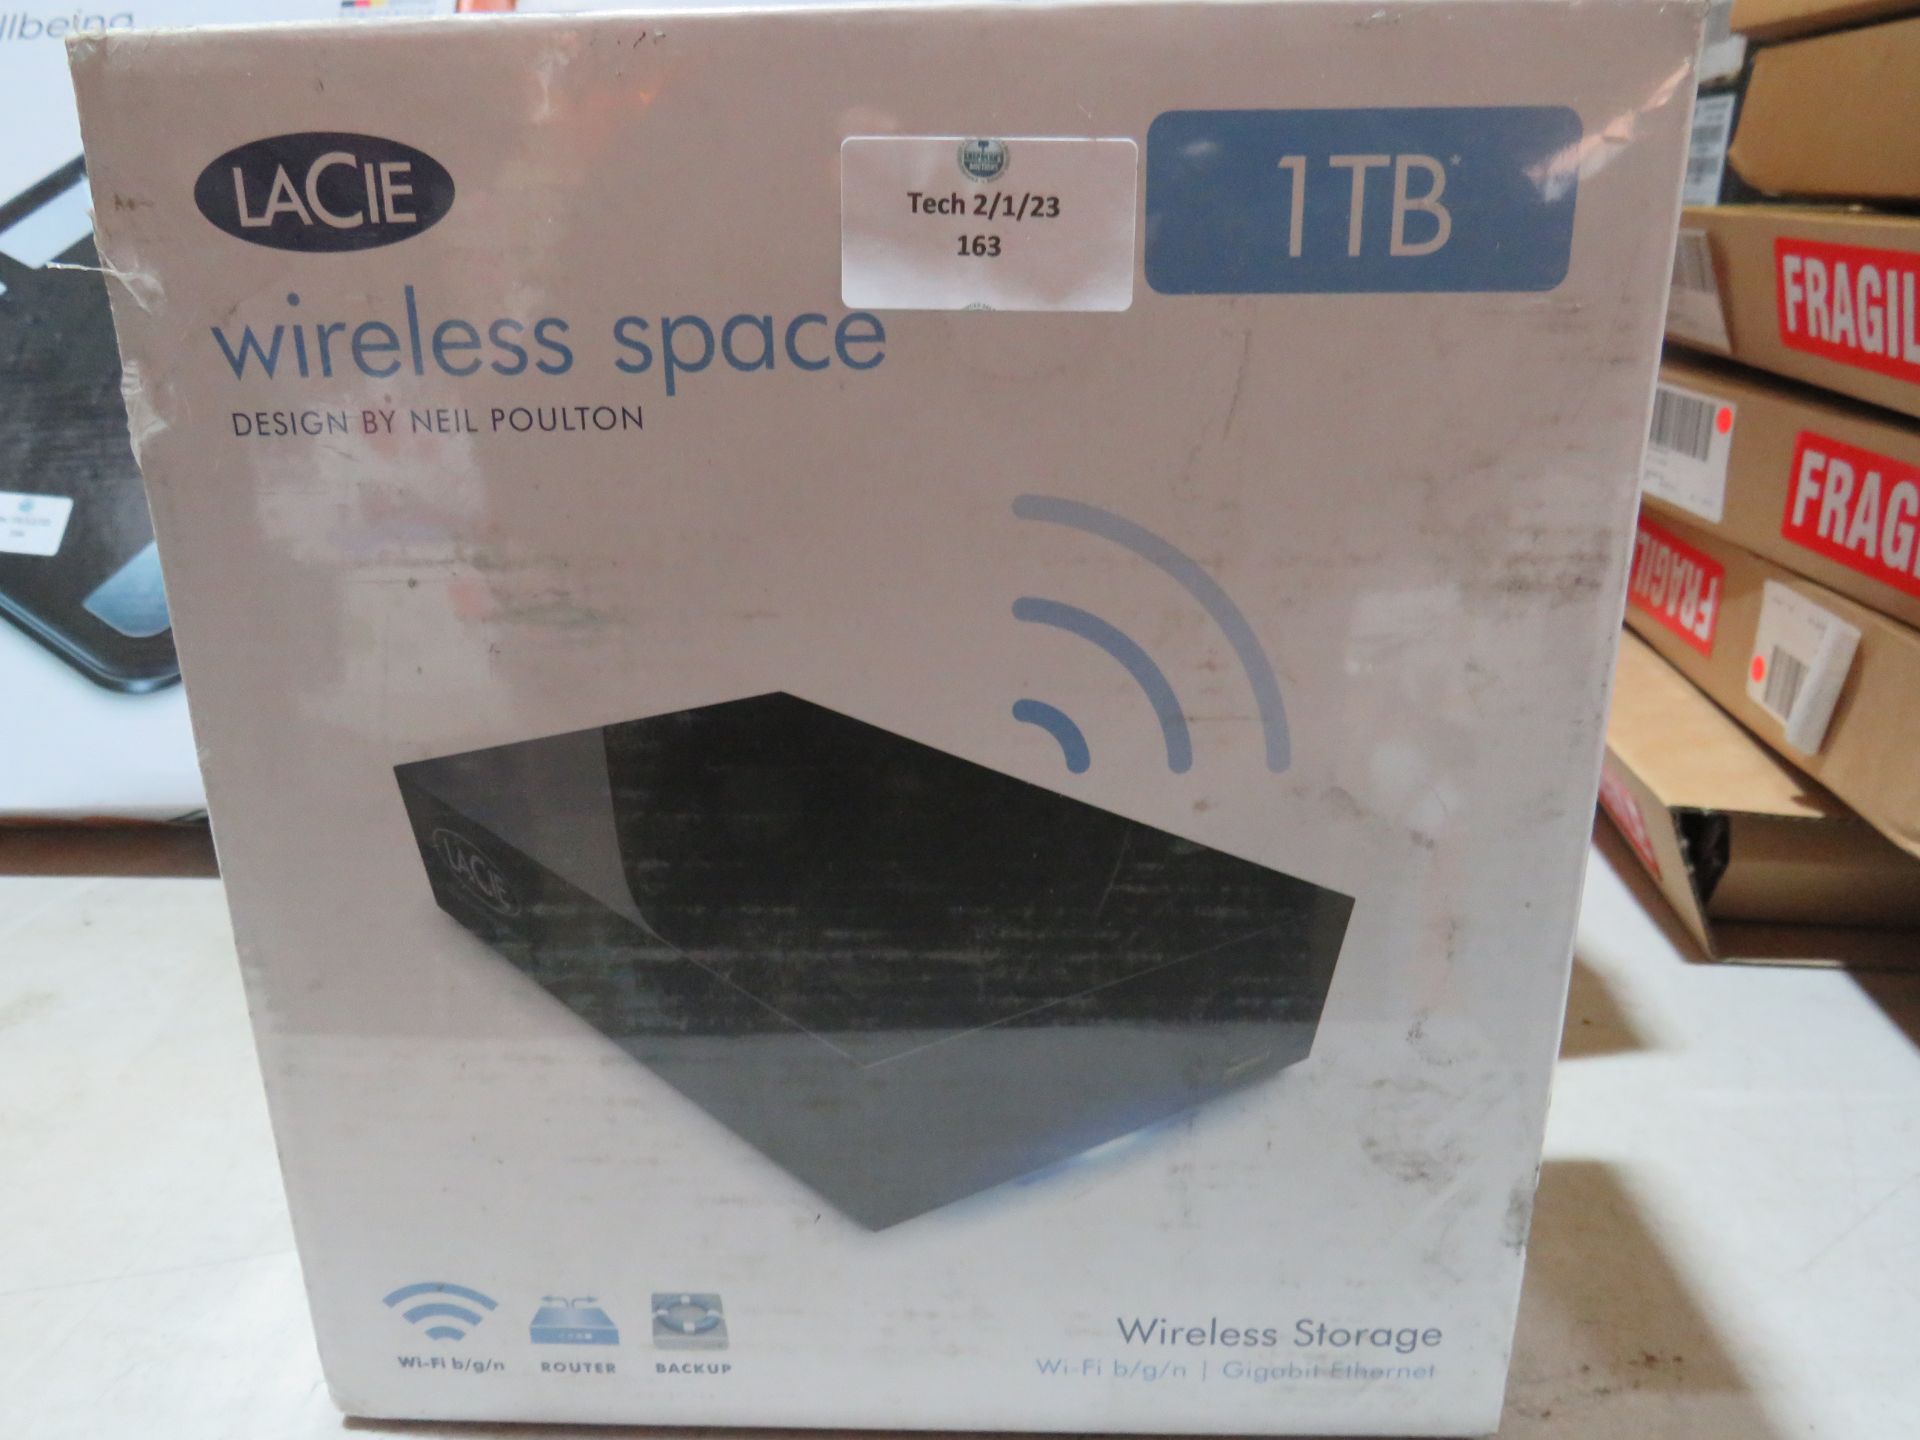 Lacie Wireless Space 1TB Wireless Storage vy Neil Poulton model 301932EK packaged still sealed